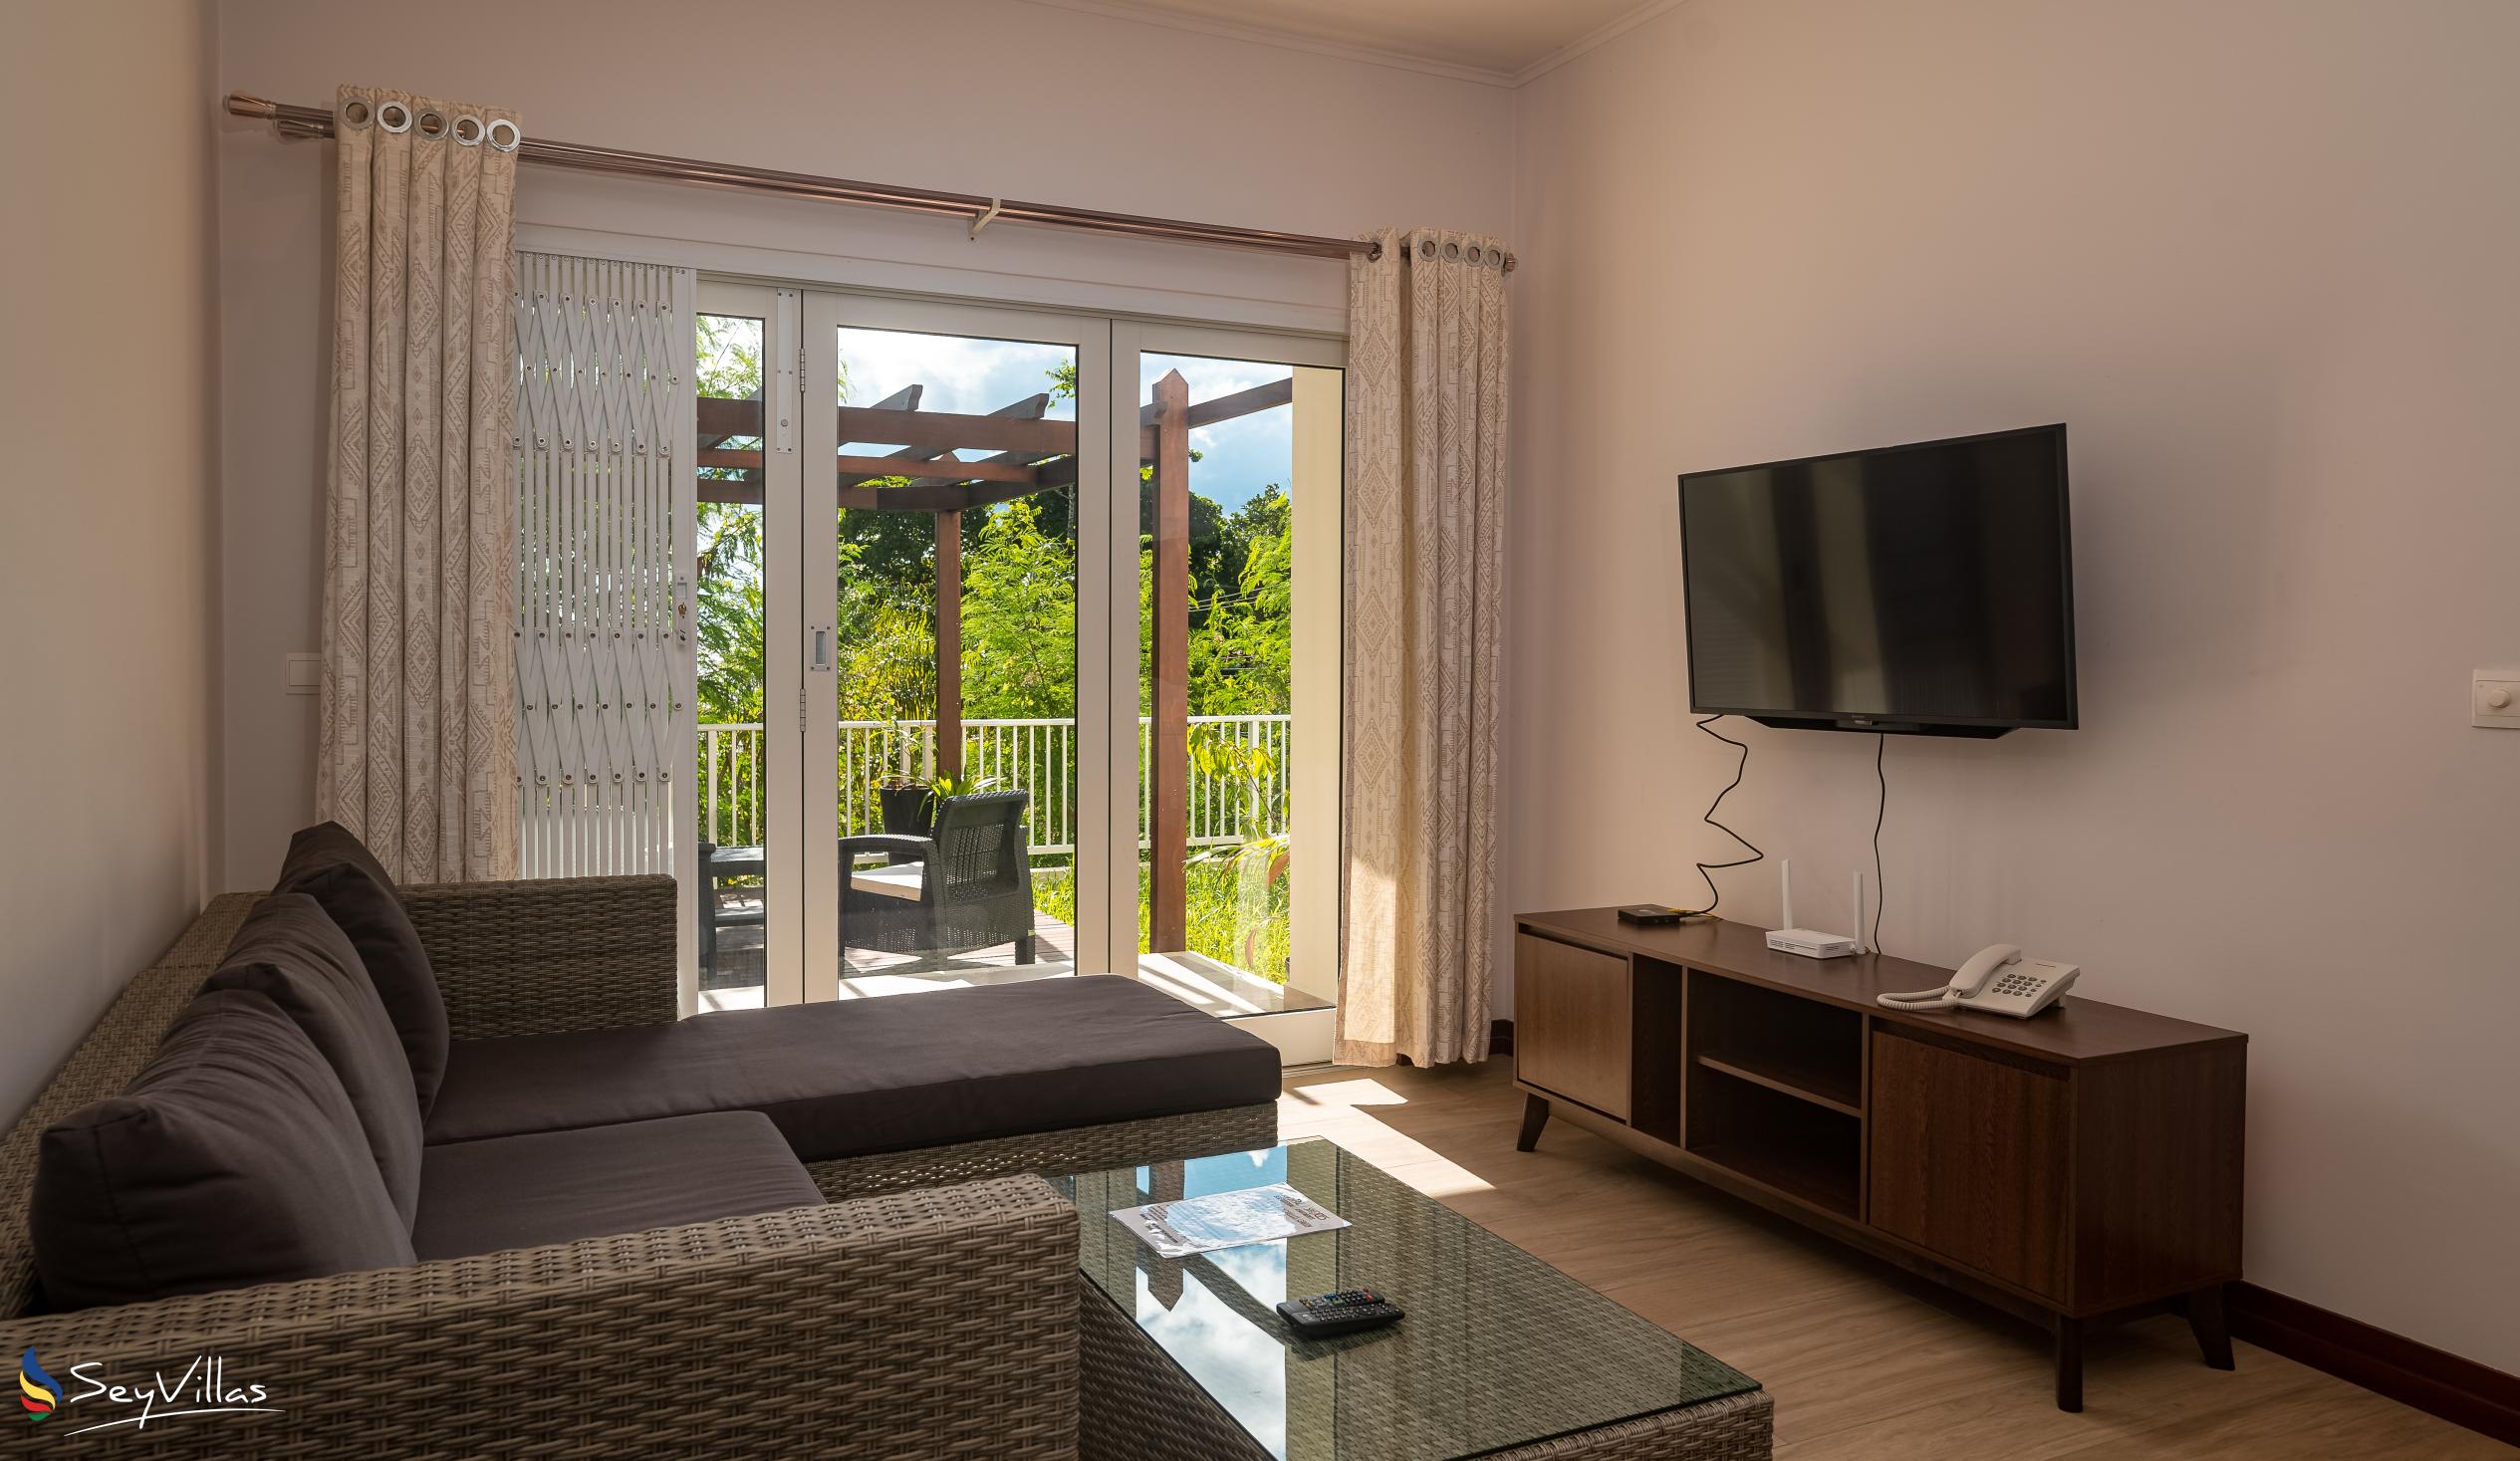 Foto 55: Crystal Shores Self Catering Apartments - Appartamento vista sul giardino - Mahé (Seychelles)